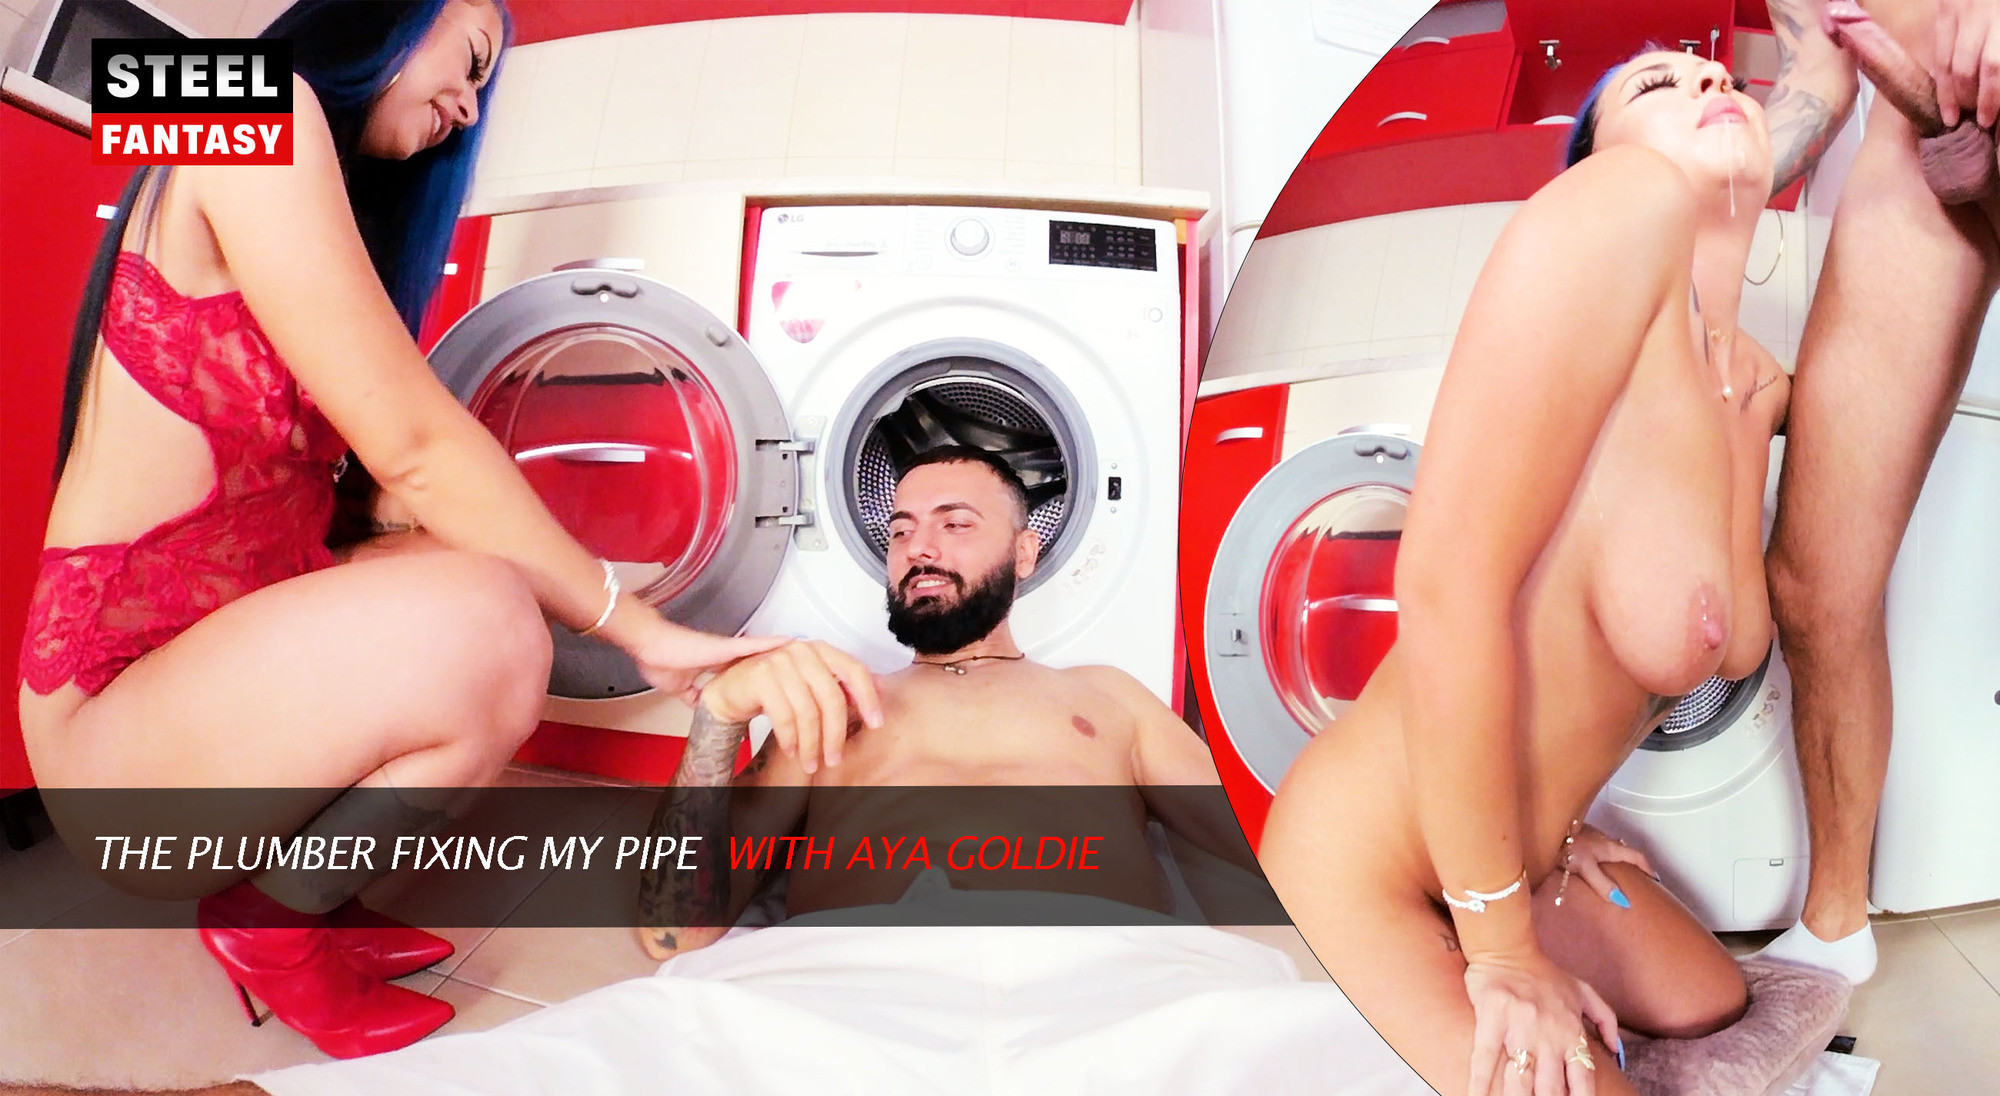 The Plumber Fixing My Pipe with Aya Goldie: Aya Goldie Slideshow